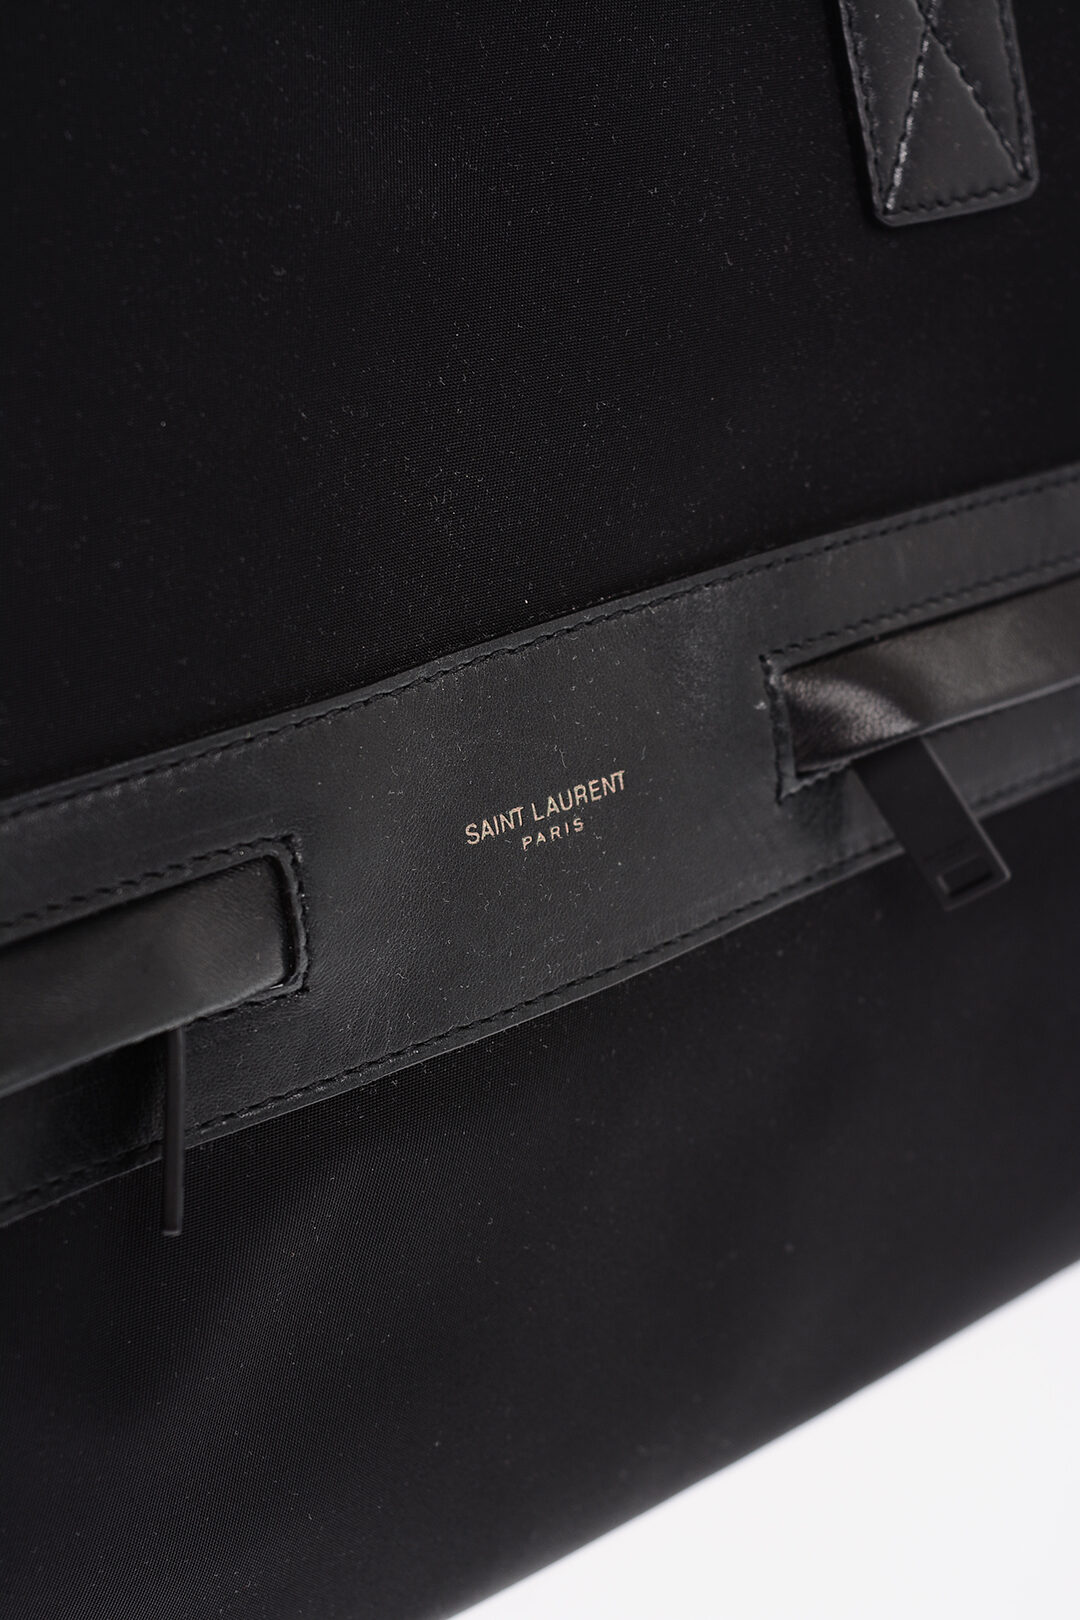 Saint Laurent Men's Logo-Debossed Leather Tote Bag